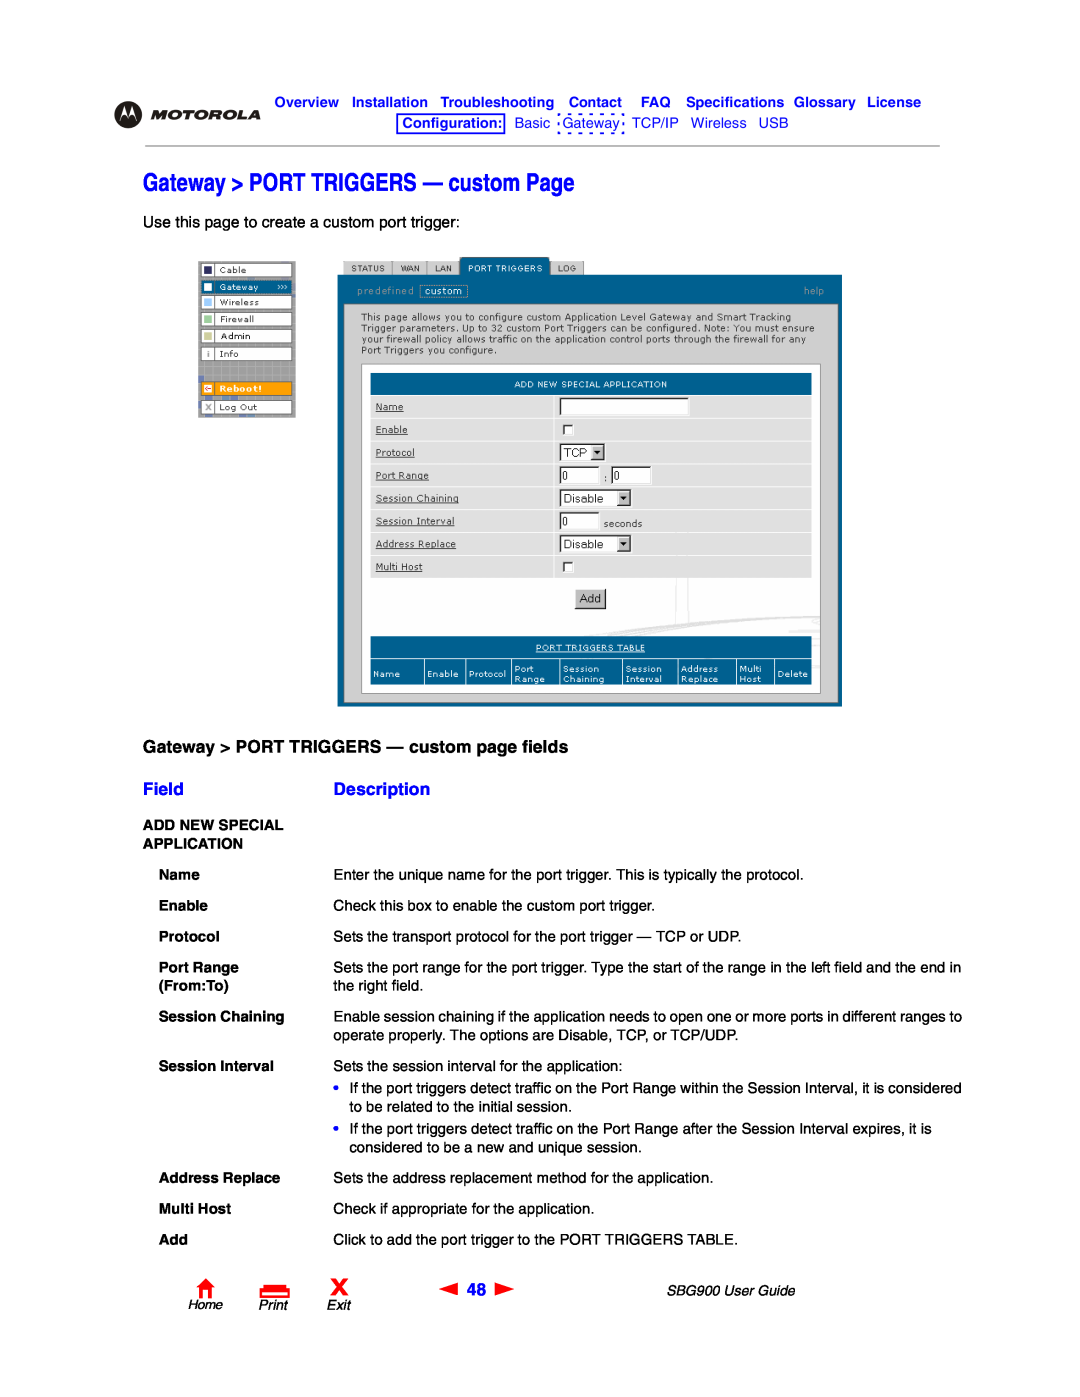 Motorola SBG900 manual Gateway PORT TRIGGERS - custom Page, Gateway PORT TRIGGERS - custom page fields, Field, Description 